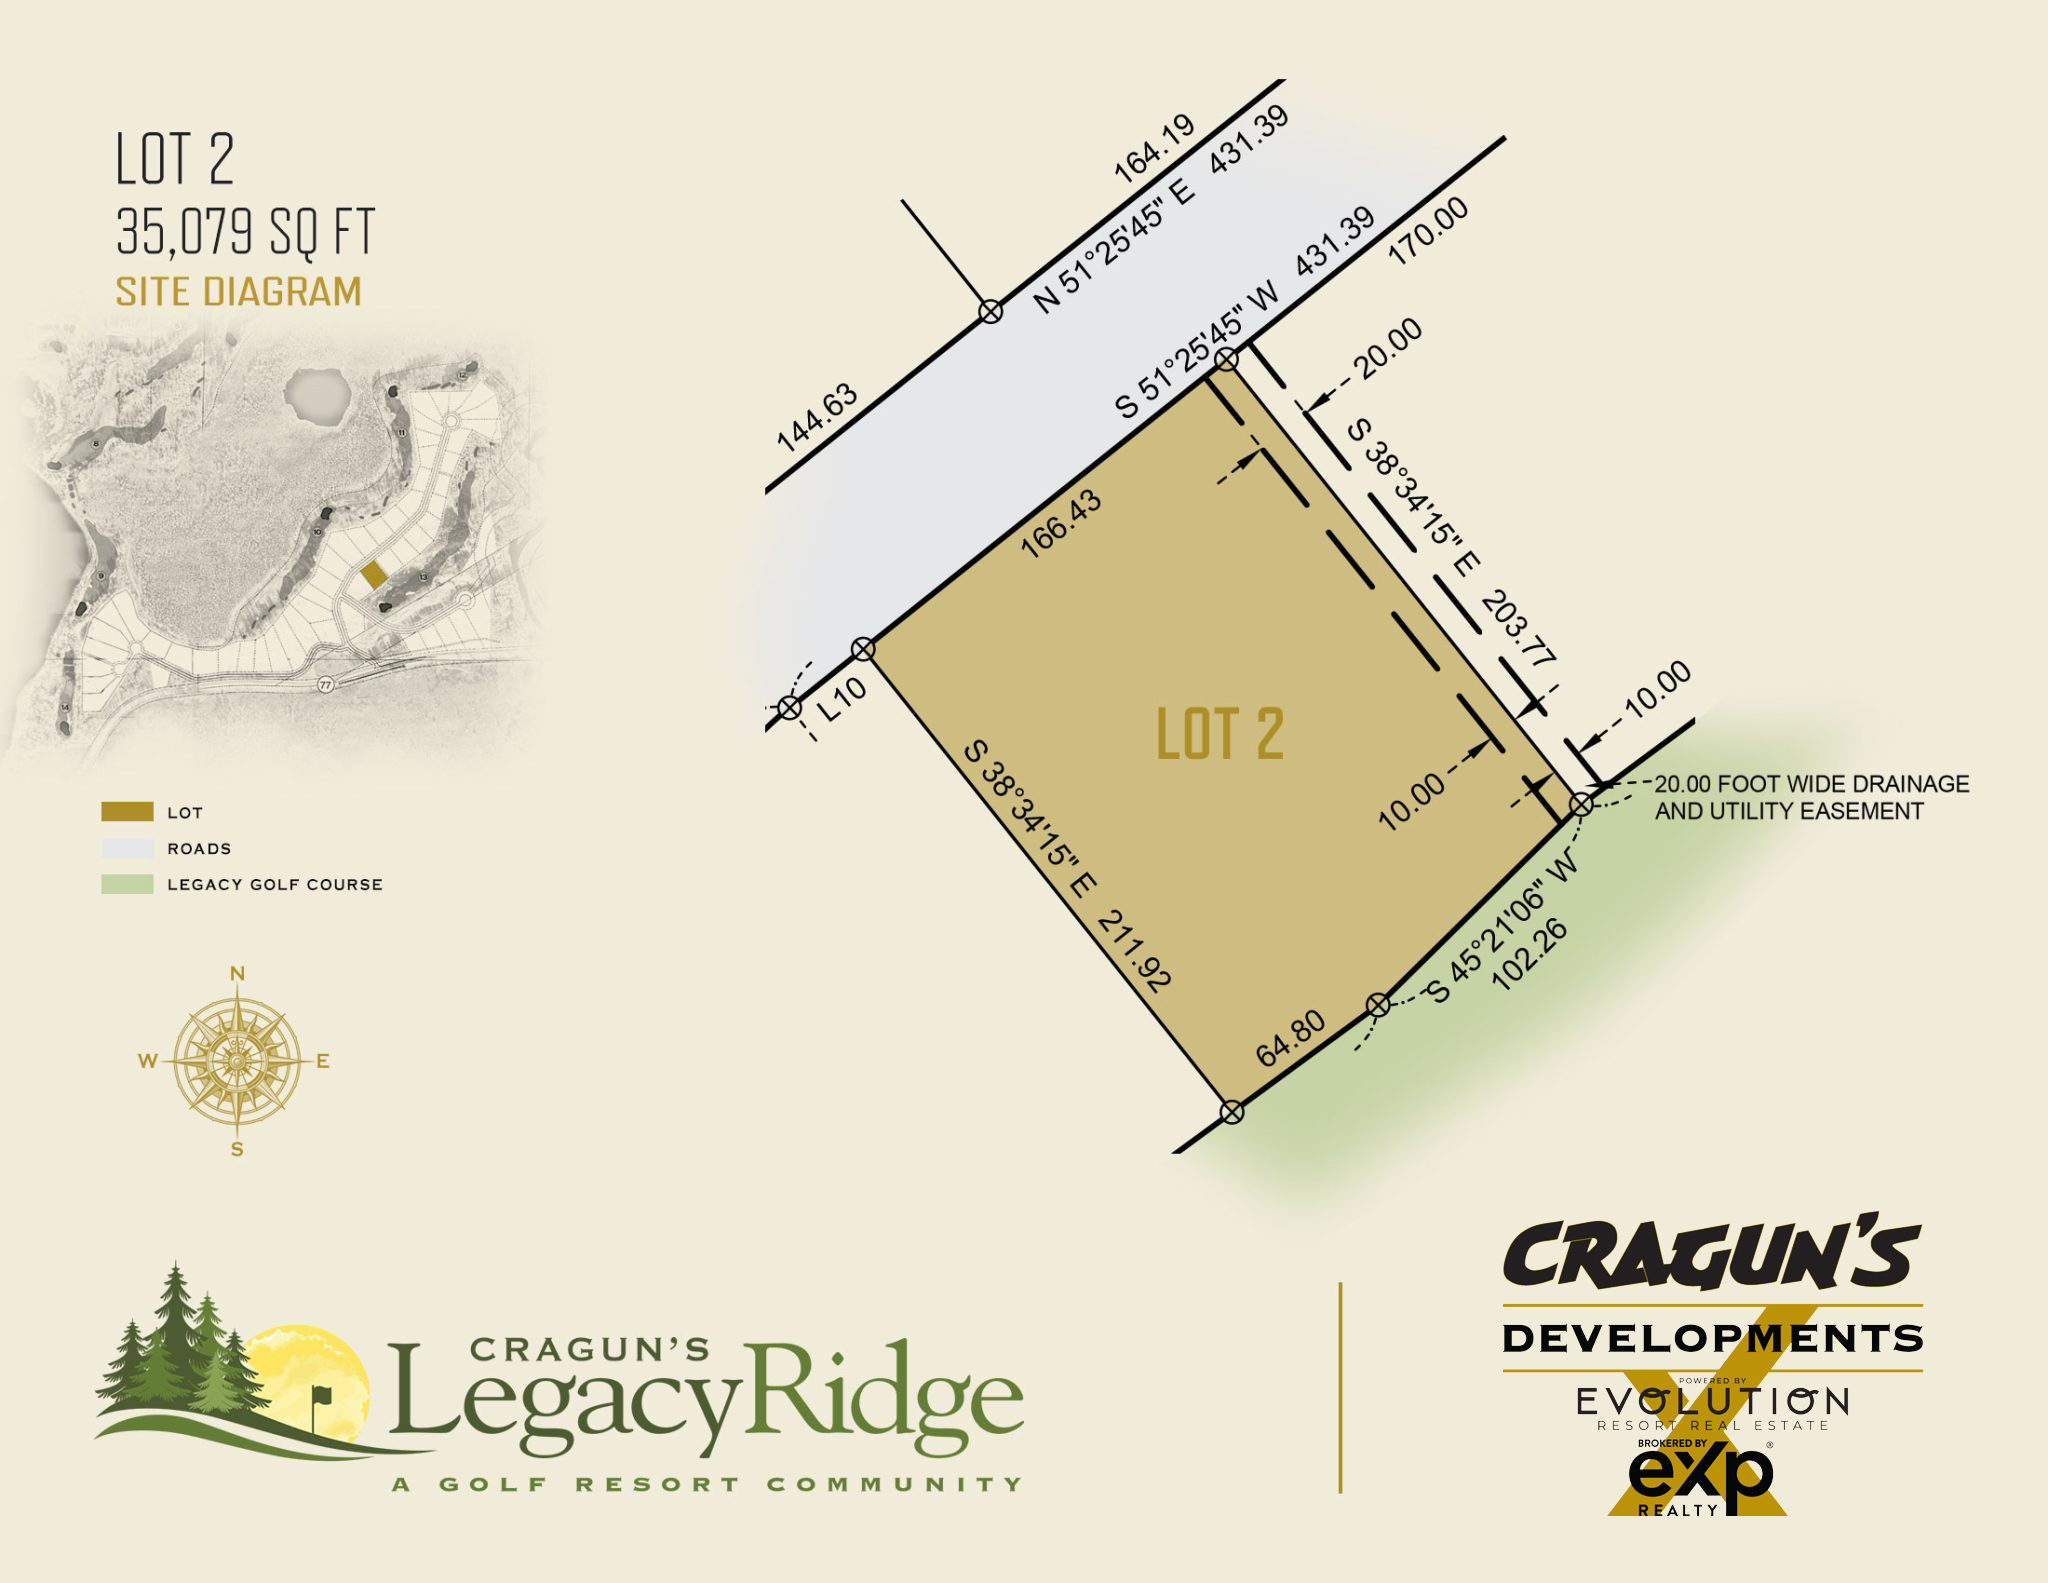 Legacy Ridge Lot 2 at Cragun's Developments in Brainerd, MN